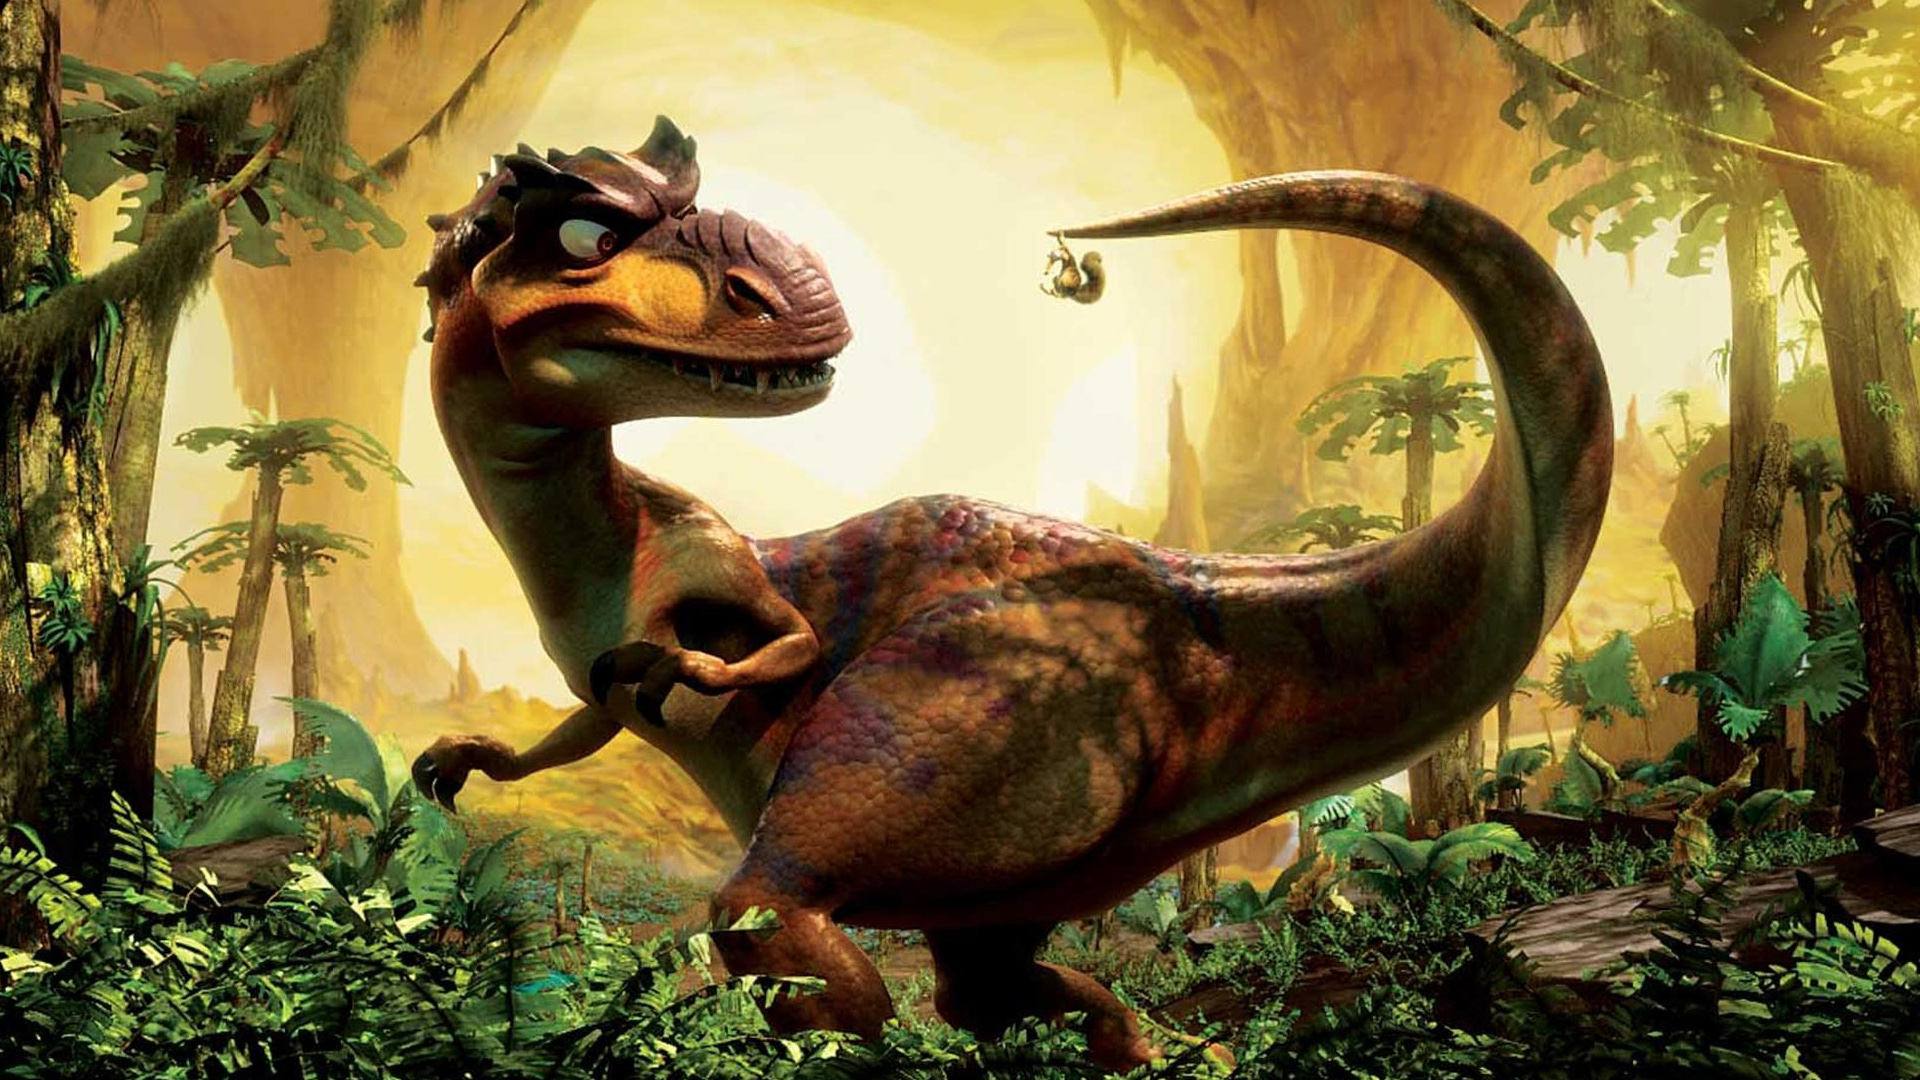 movie, ice age: dawn of the dinosaurs, dinosaur, jungle, vegetation, ice age